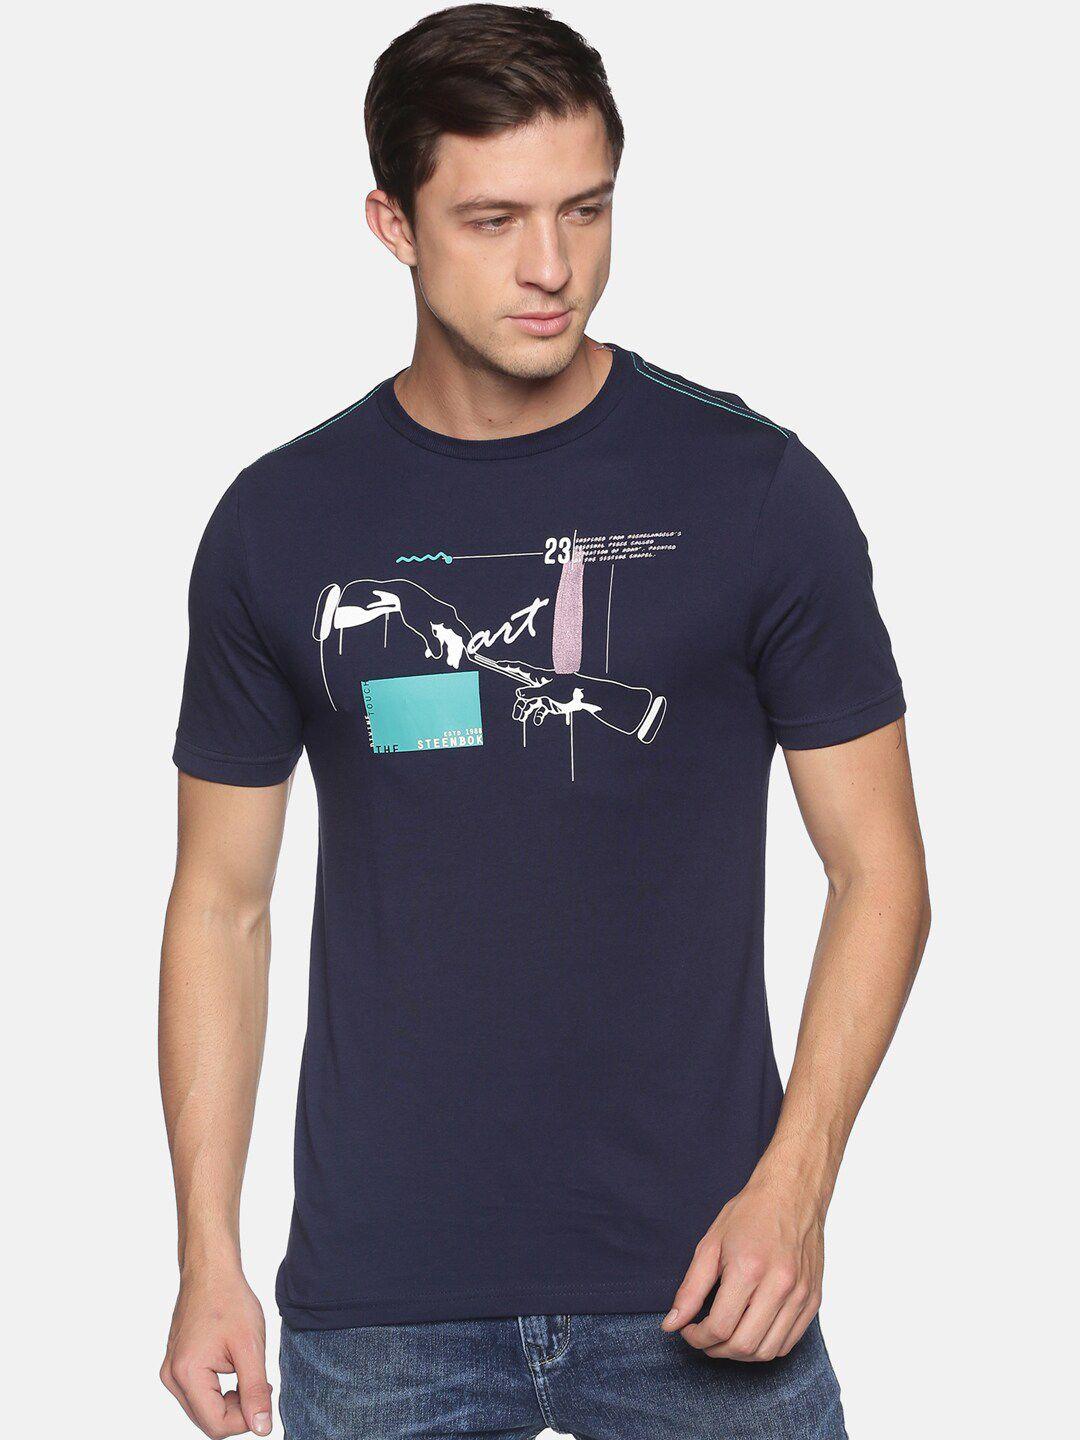 steenbok men navy blue graphic printed t-shirt